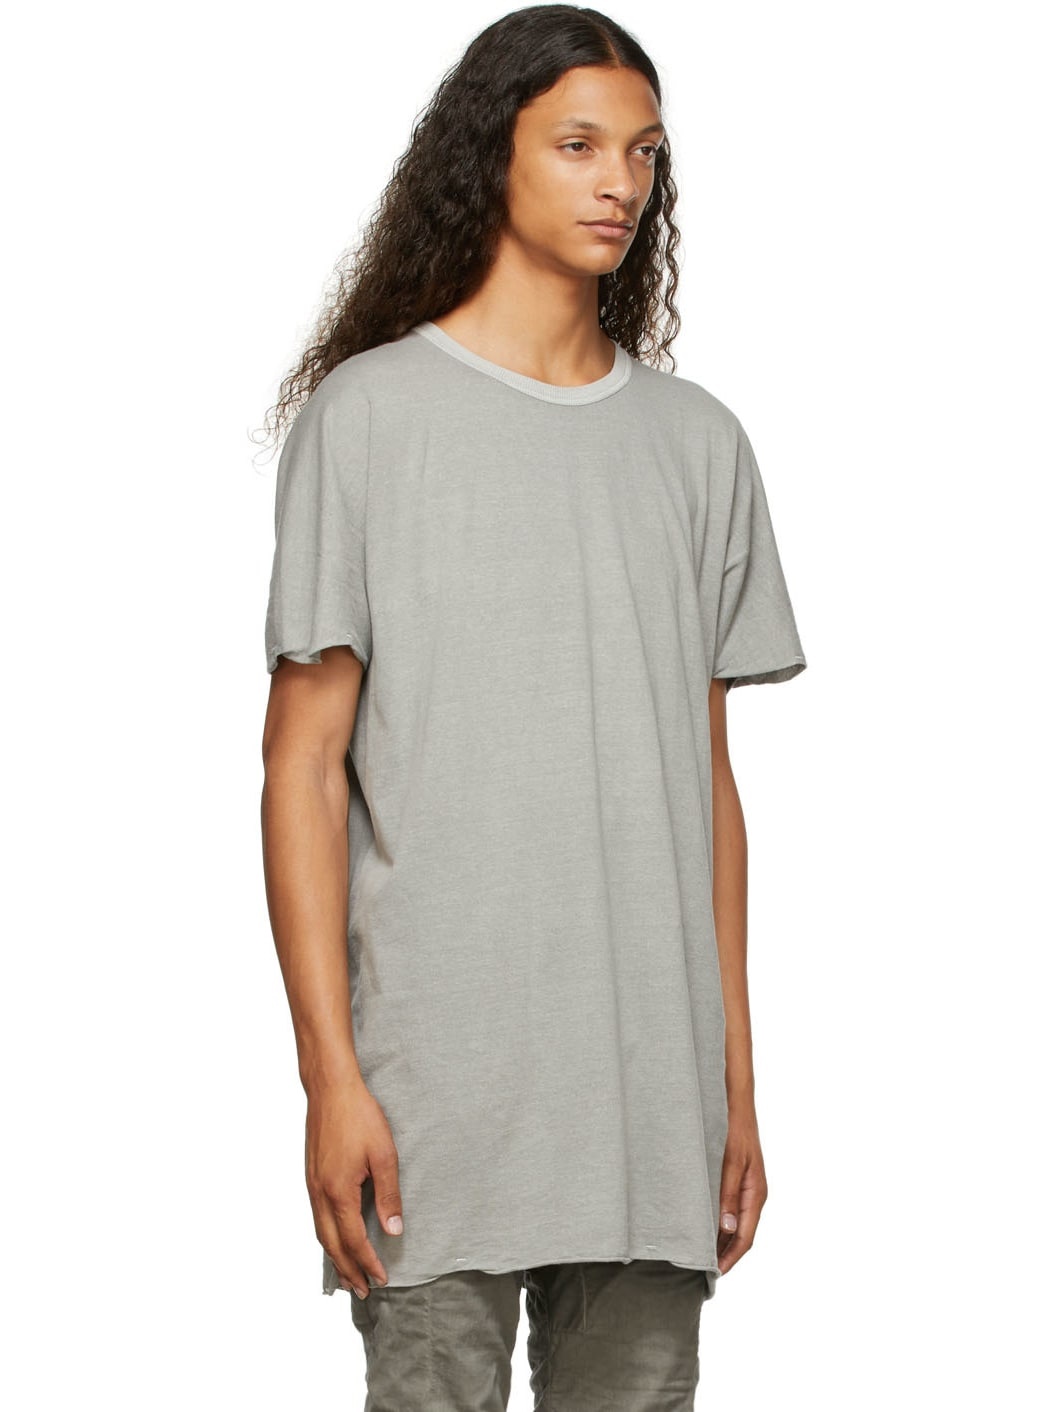 Grey Garment-Dyed One-Piece T-Shirt - 2